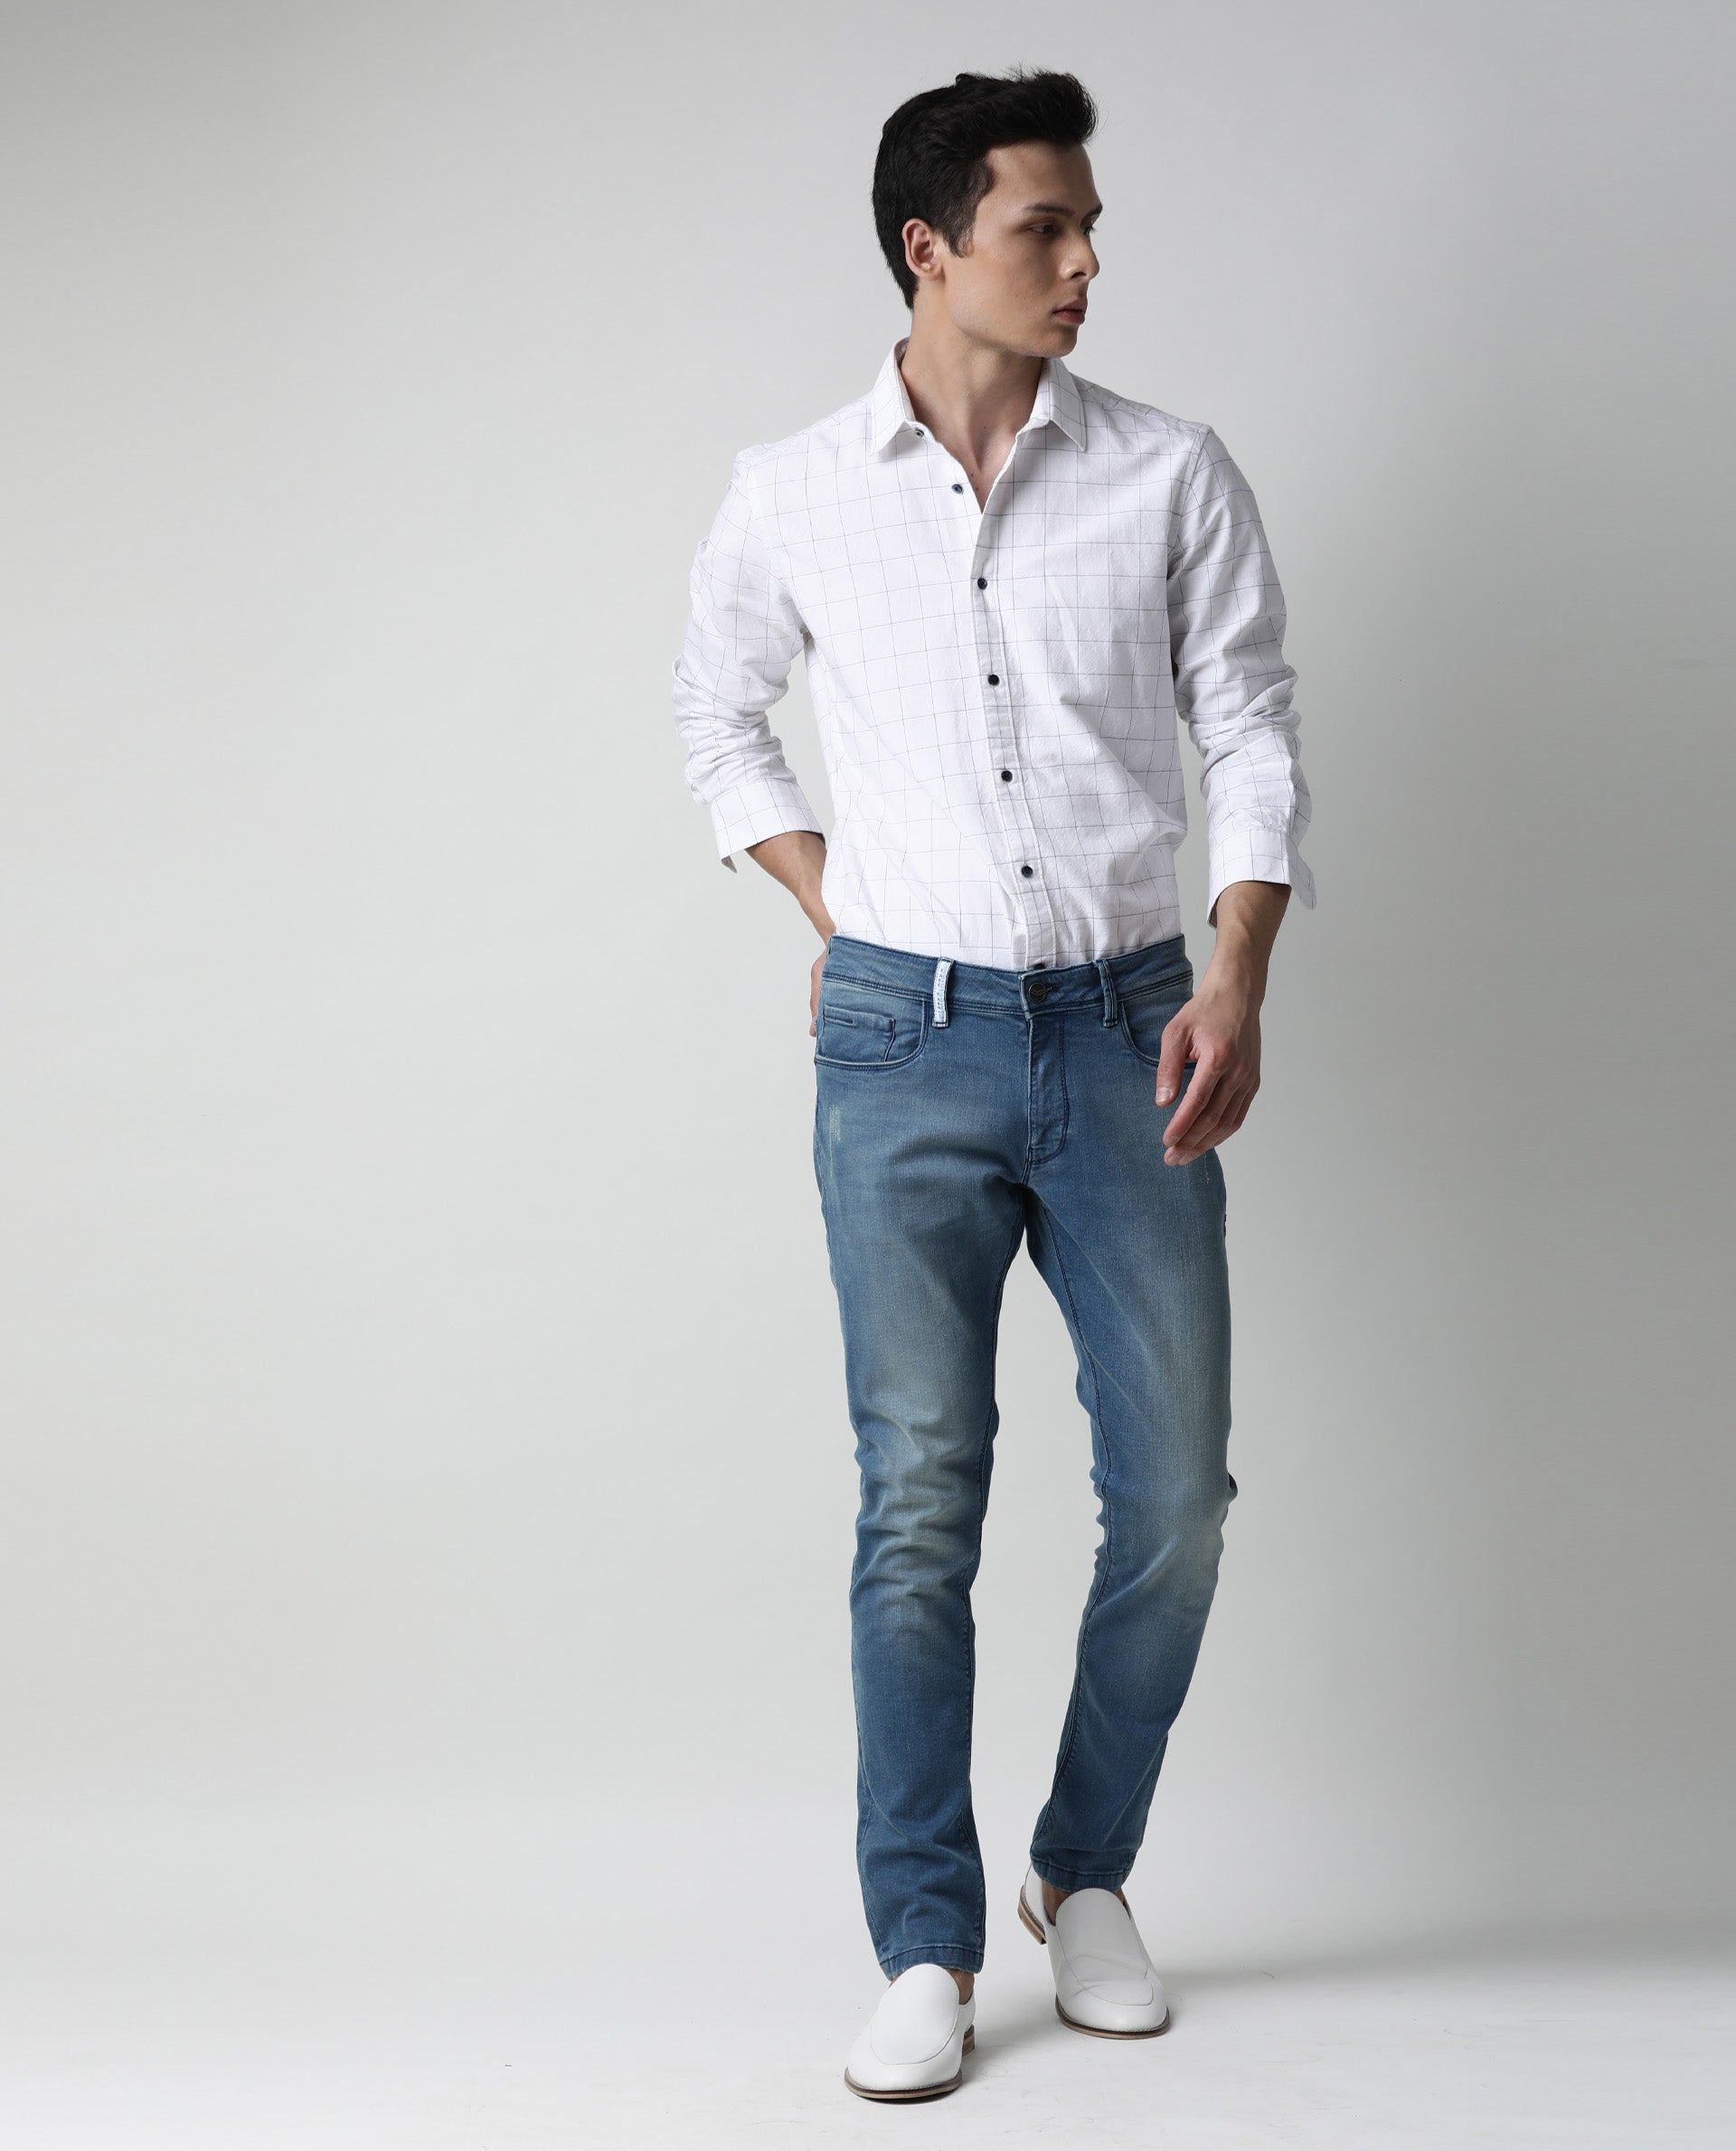 Discover more than 137 mens blue jeans pants super hot